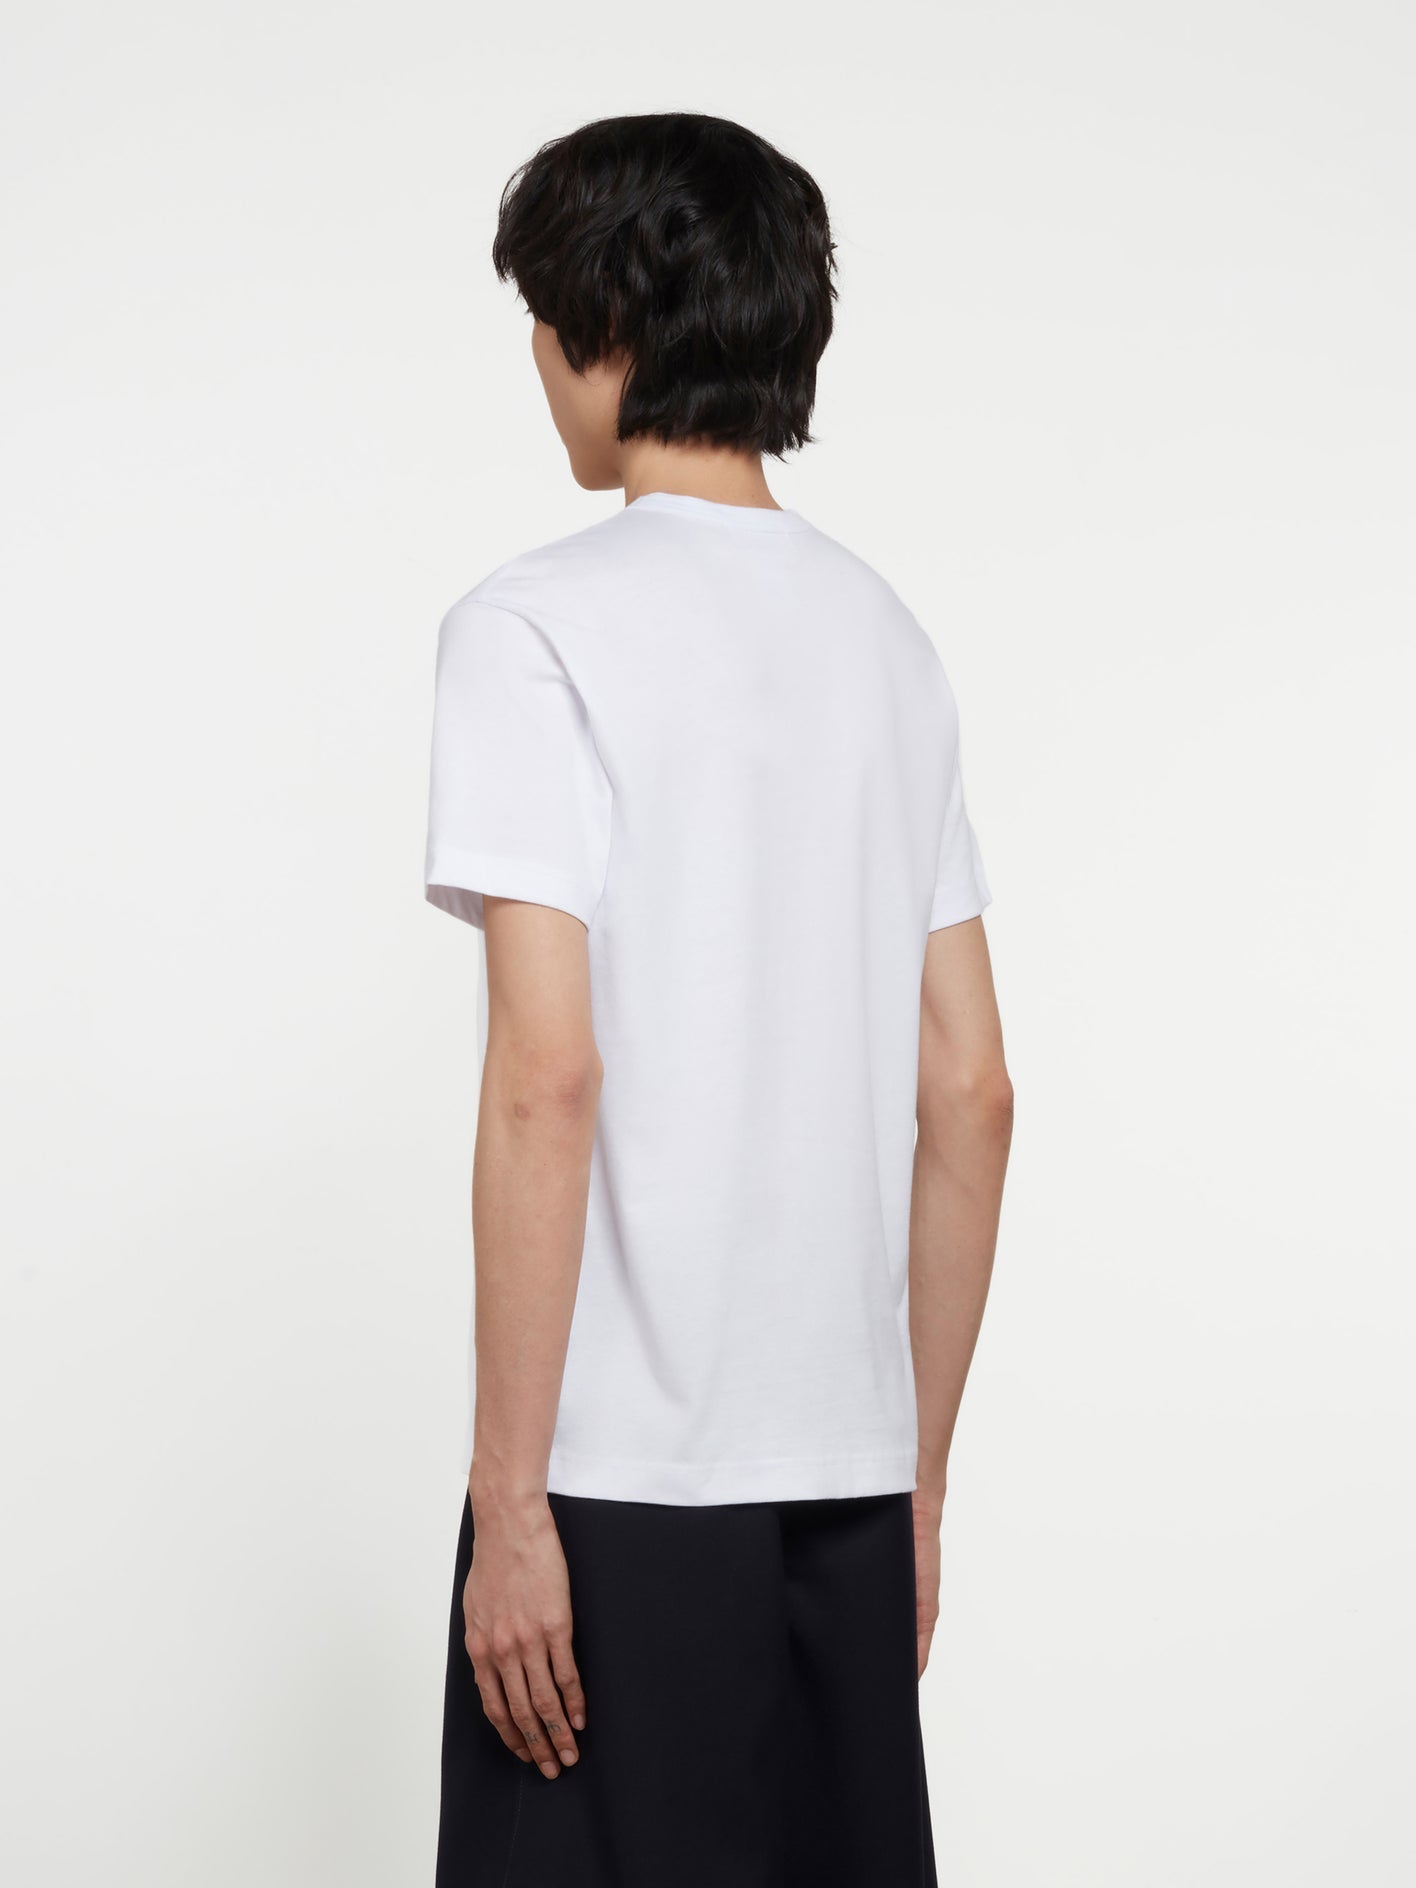 CDG Shirt x Lacoste / Men's Printed T-Shirt